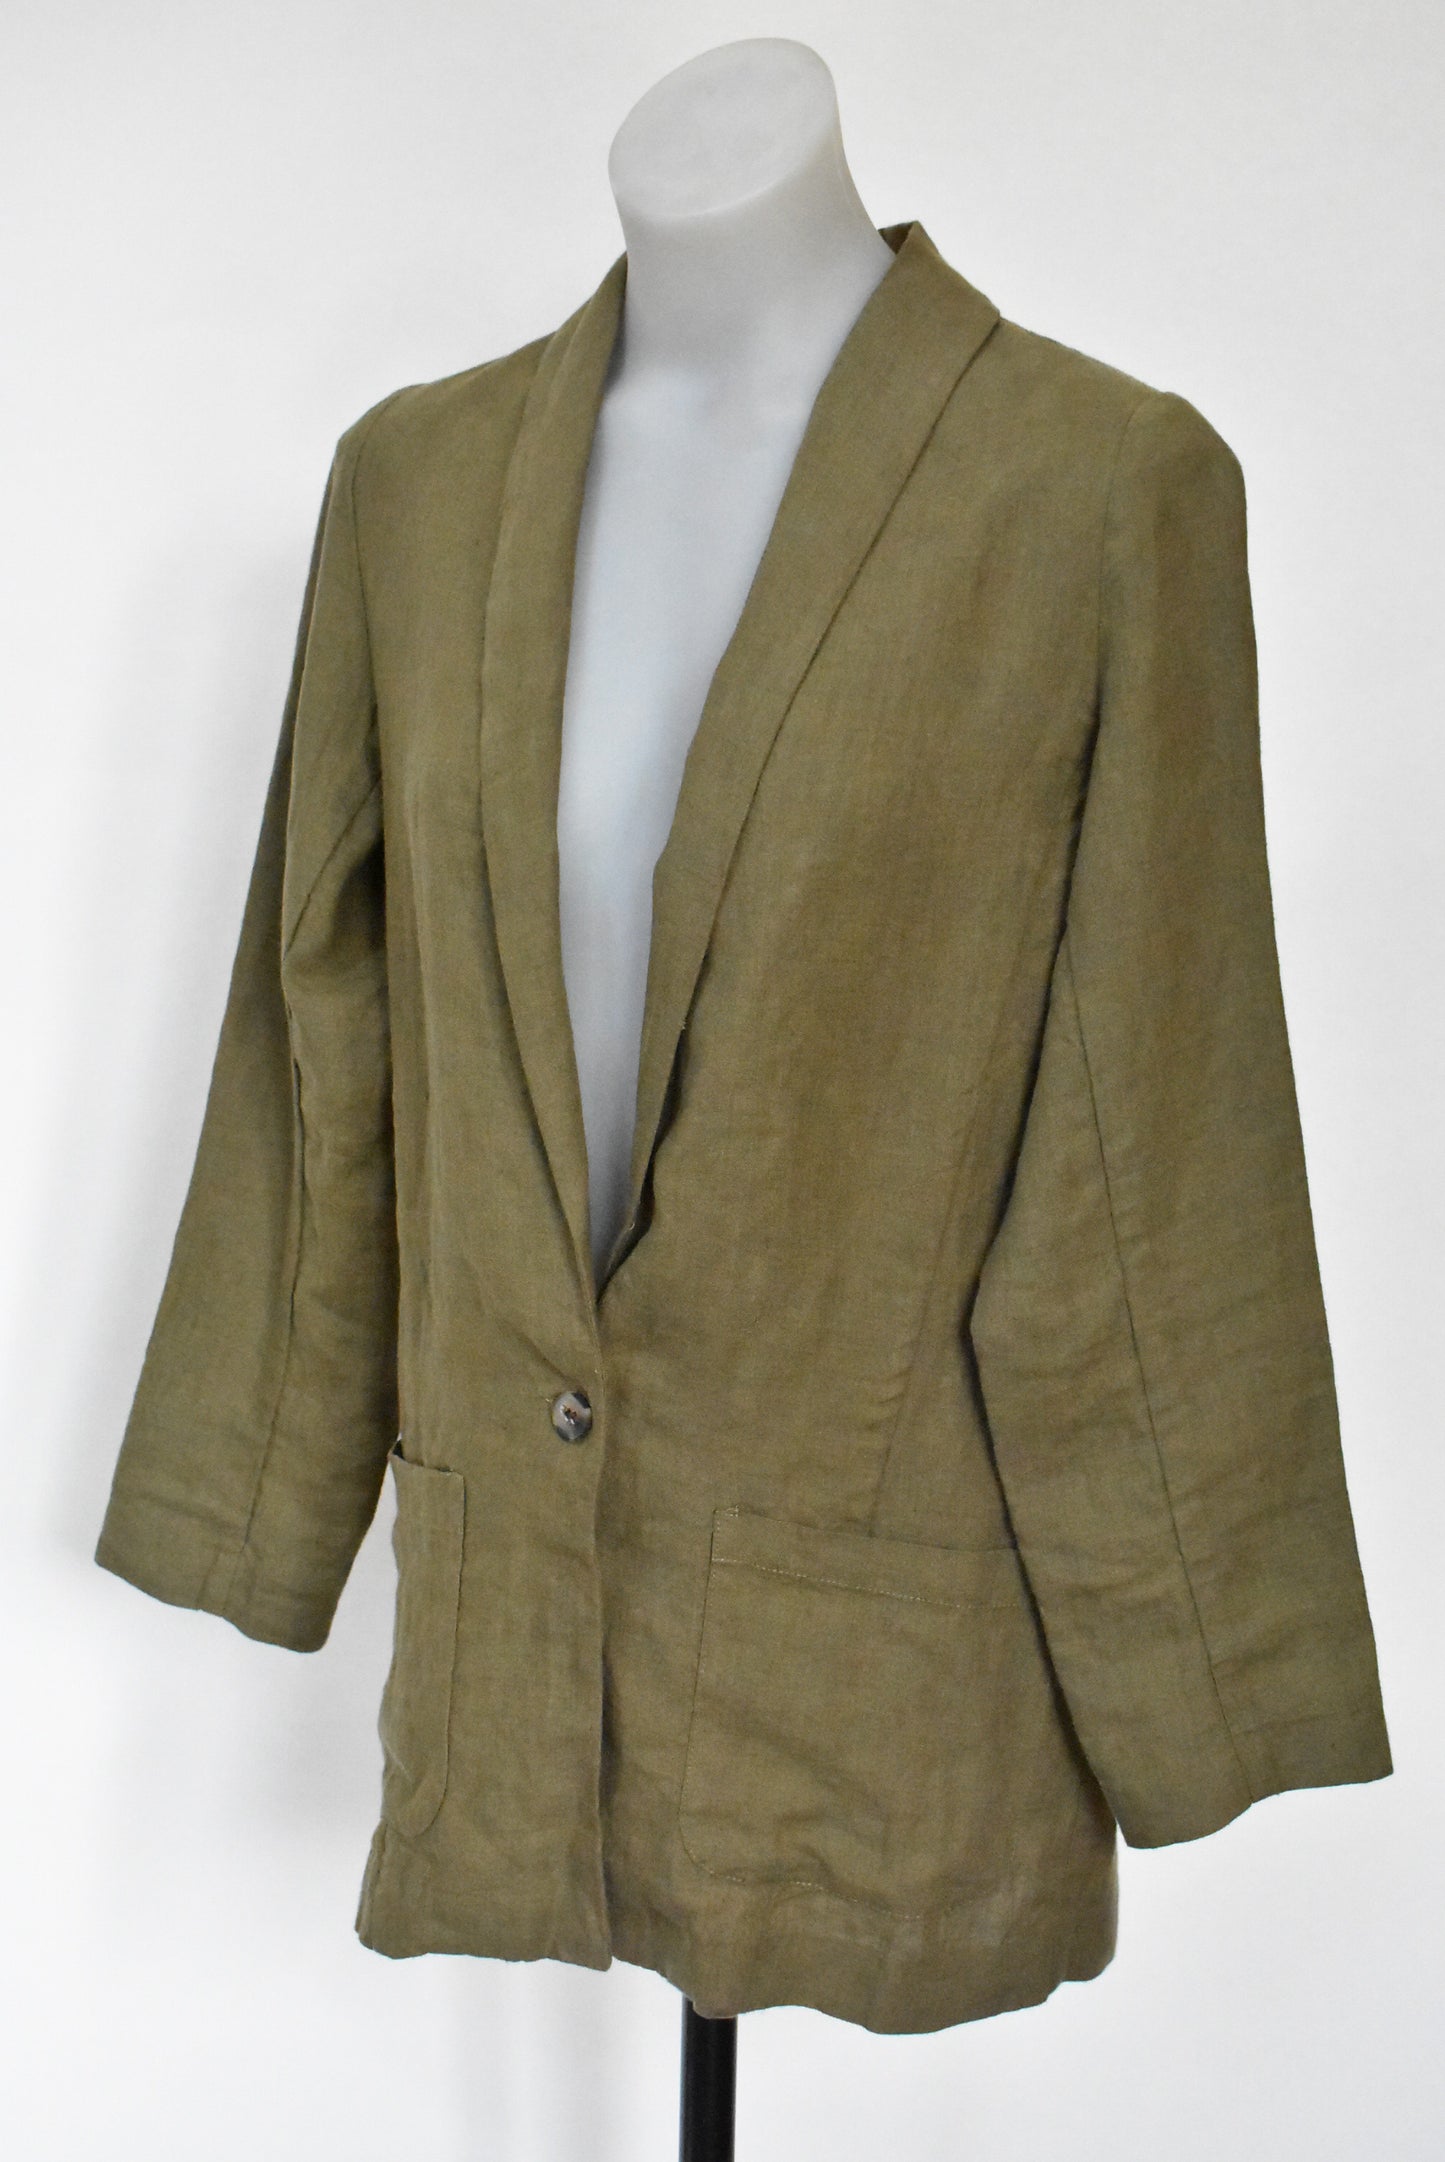 Max linen olive green blazer, 6 (NWT)